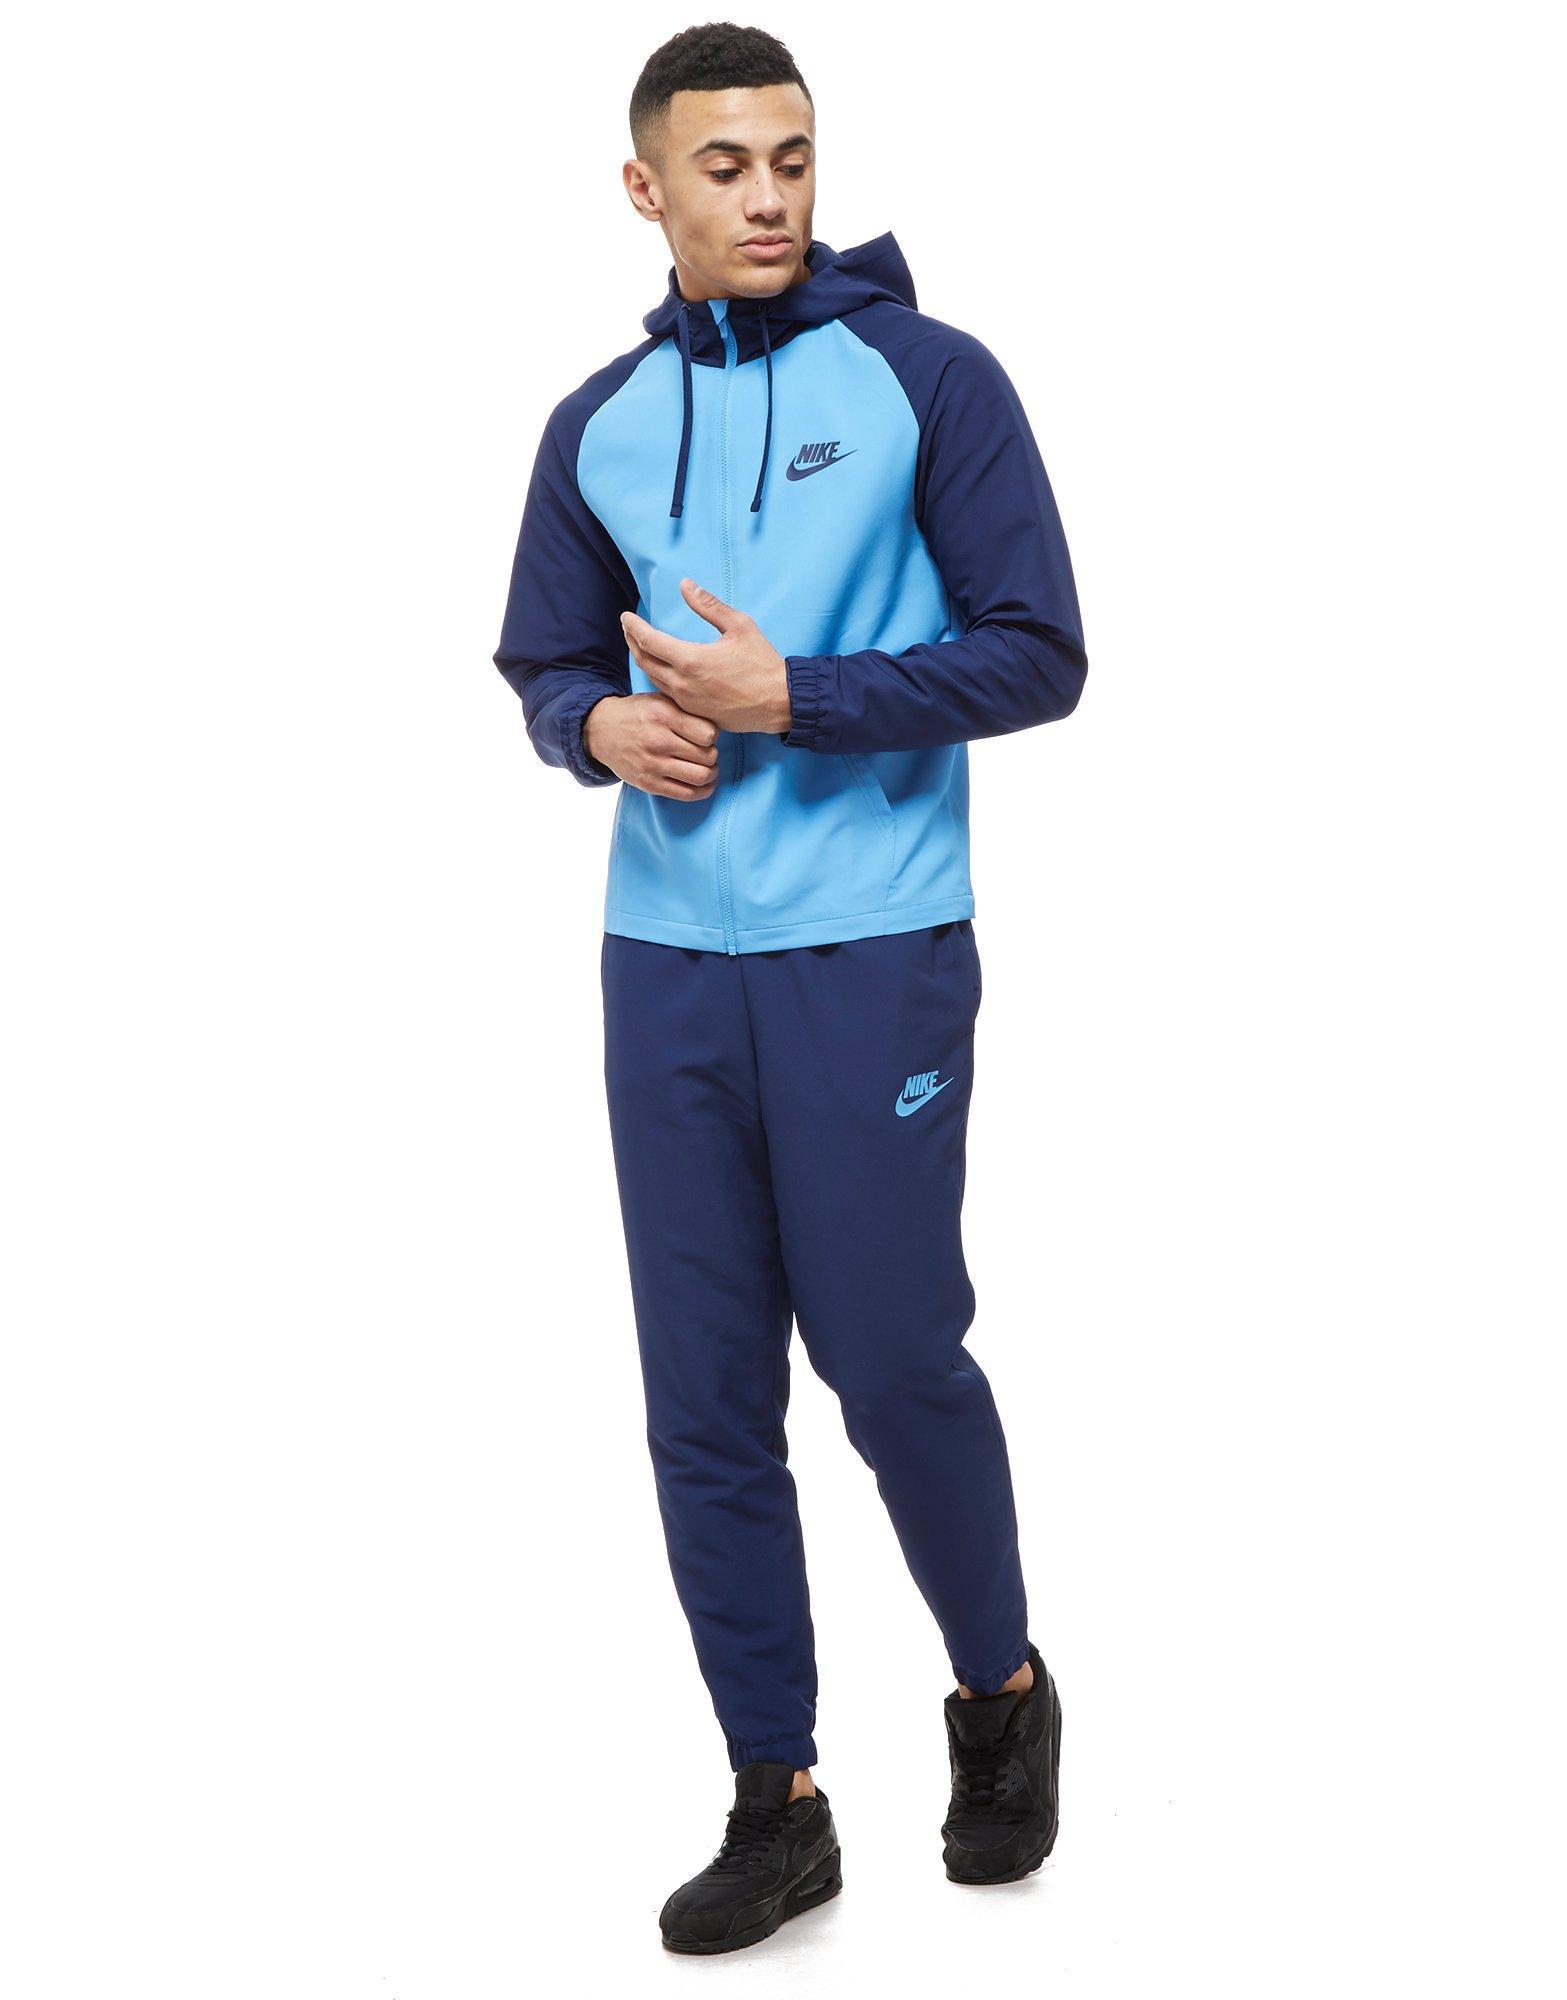 Automático prioridad Antagonista Nike Shutout Sweatsuit